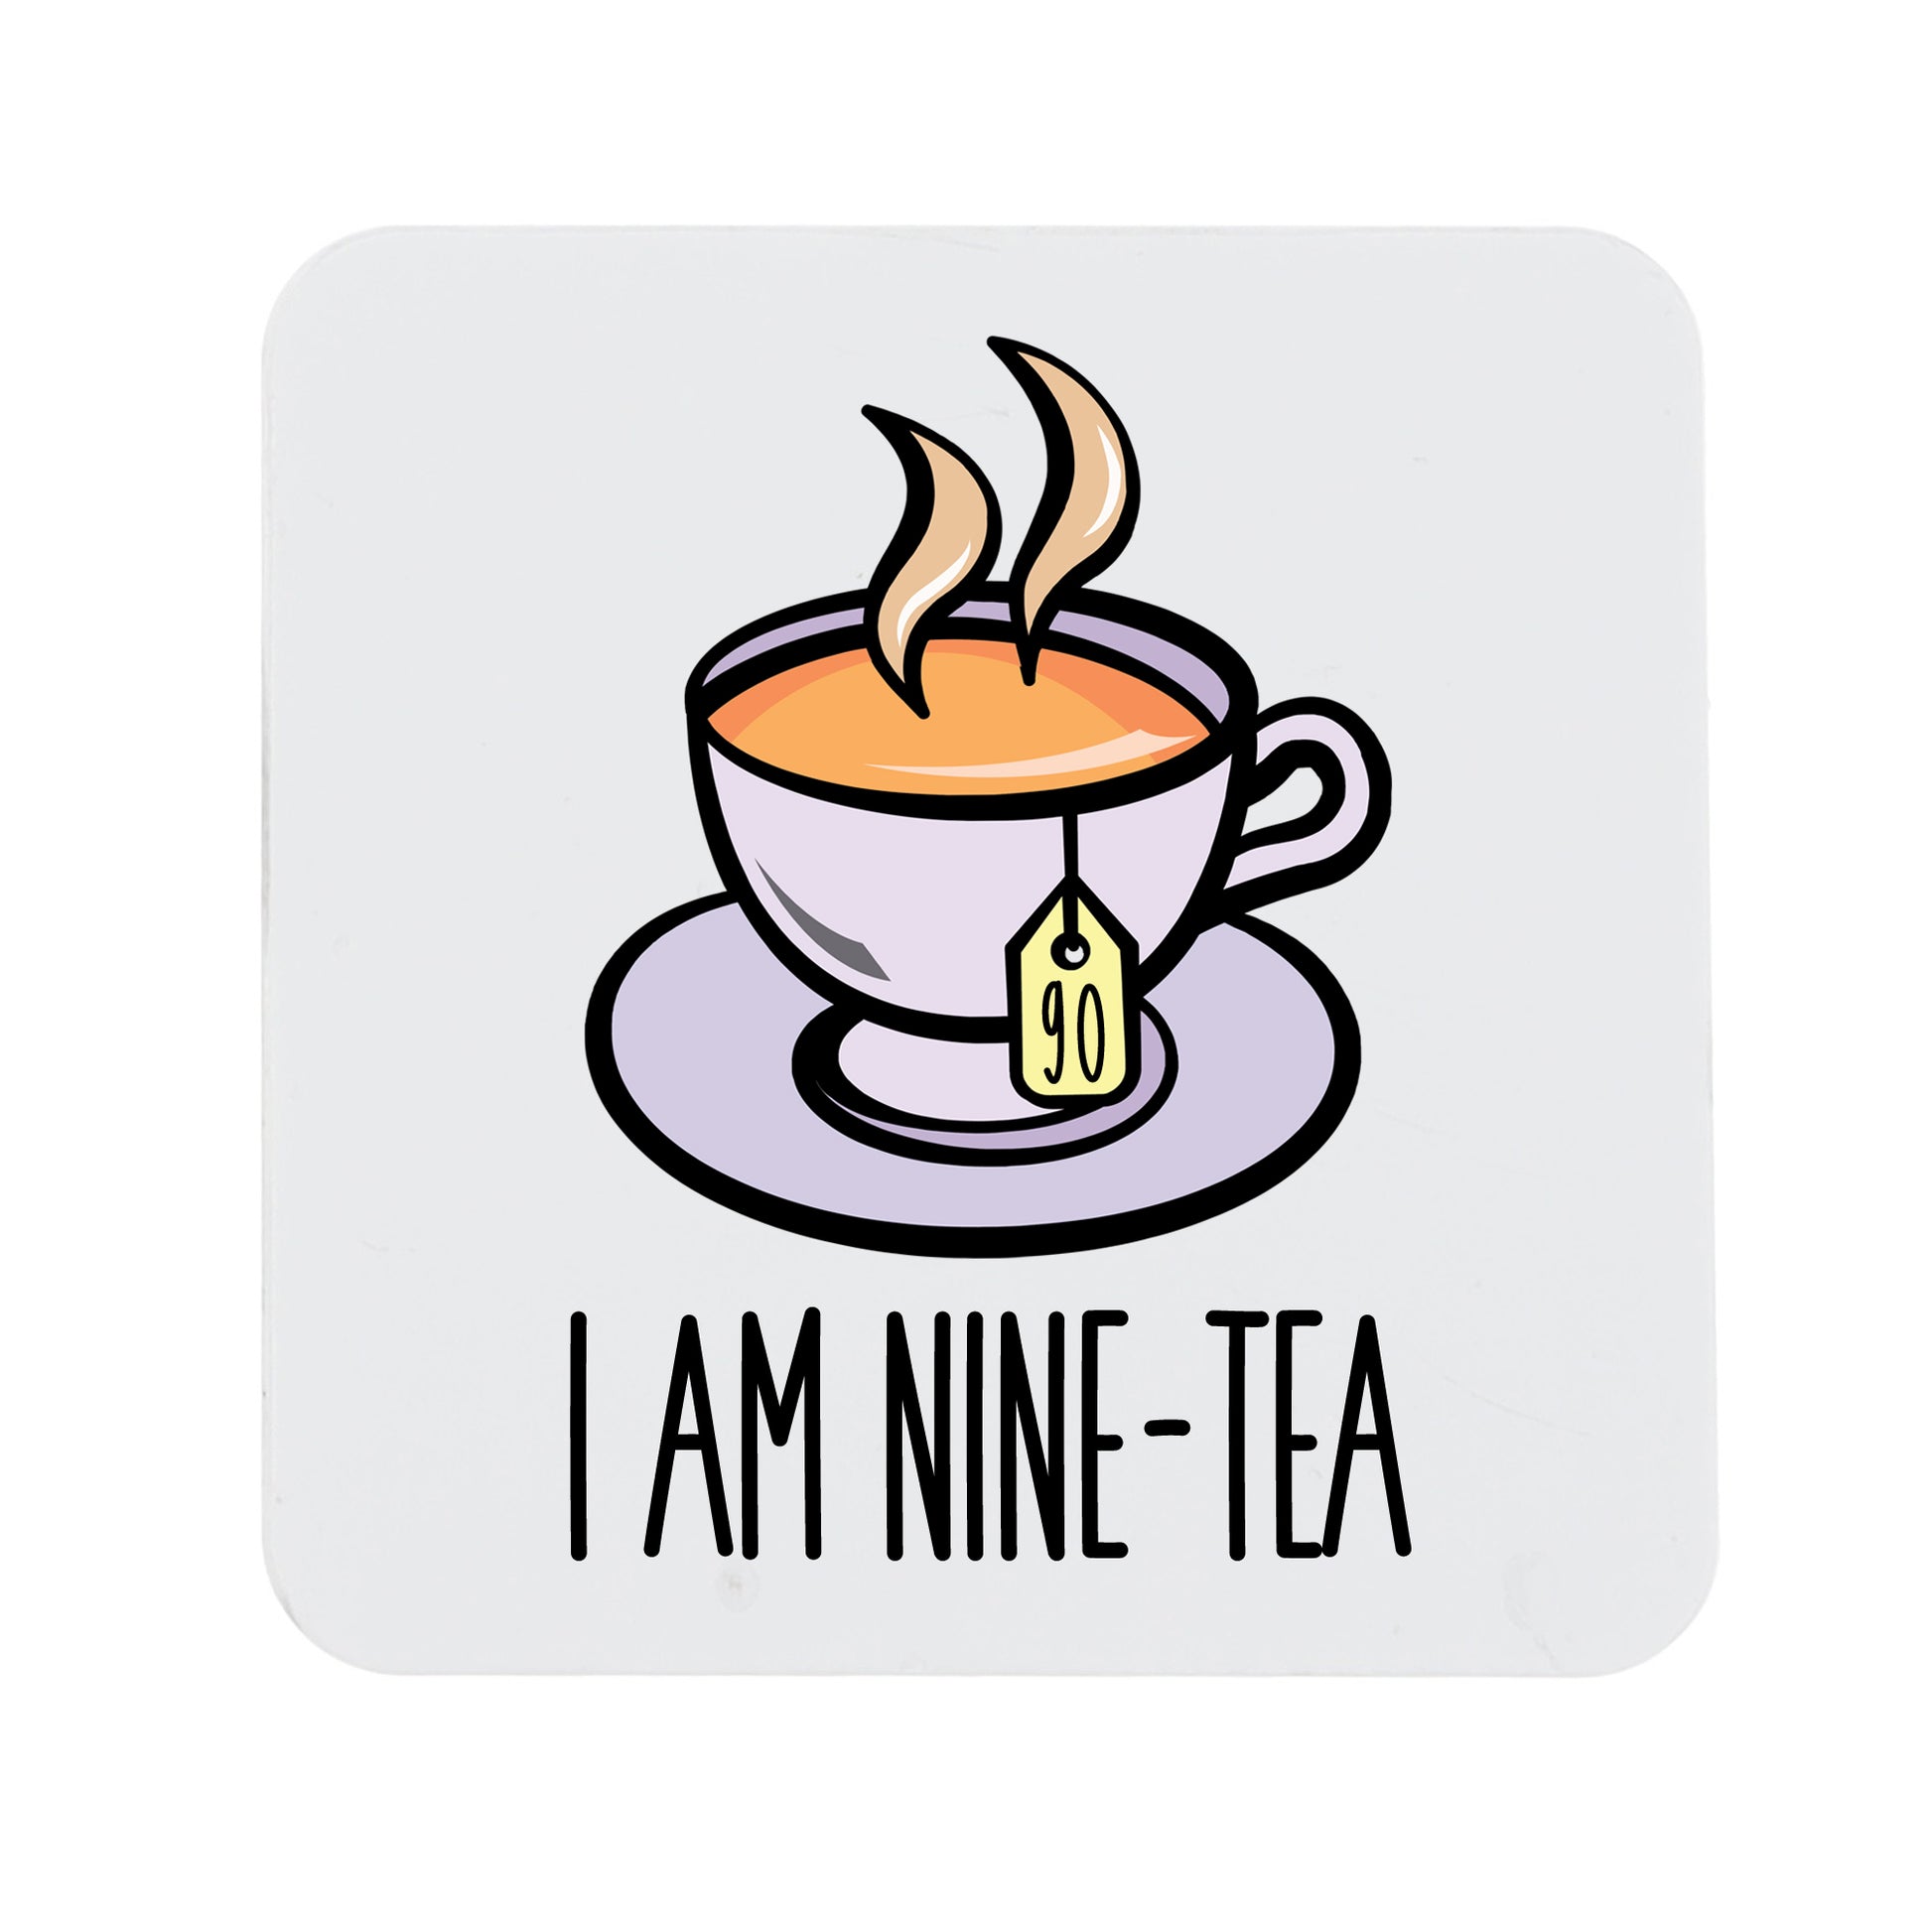 I Am Nine-Tea Funny 90th Birthday Mug Gift for Tea Lovers  - Always Looking Good - Printed Coaster Only  